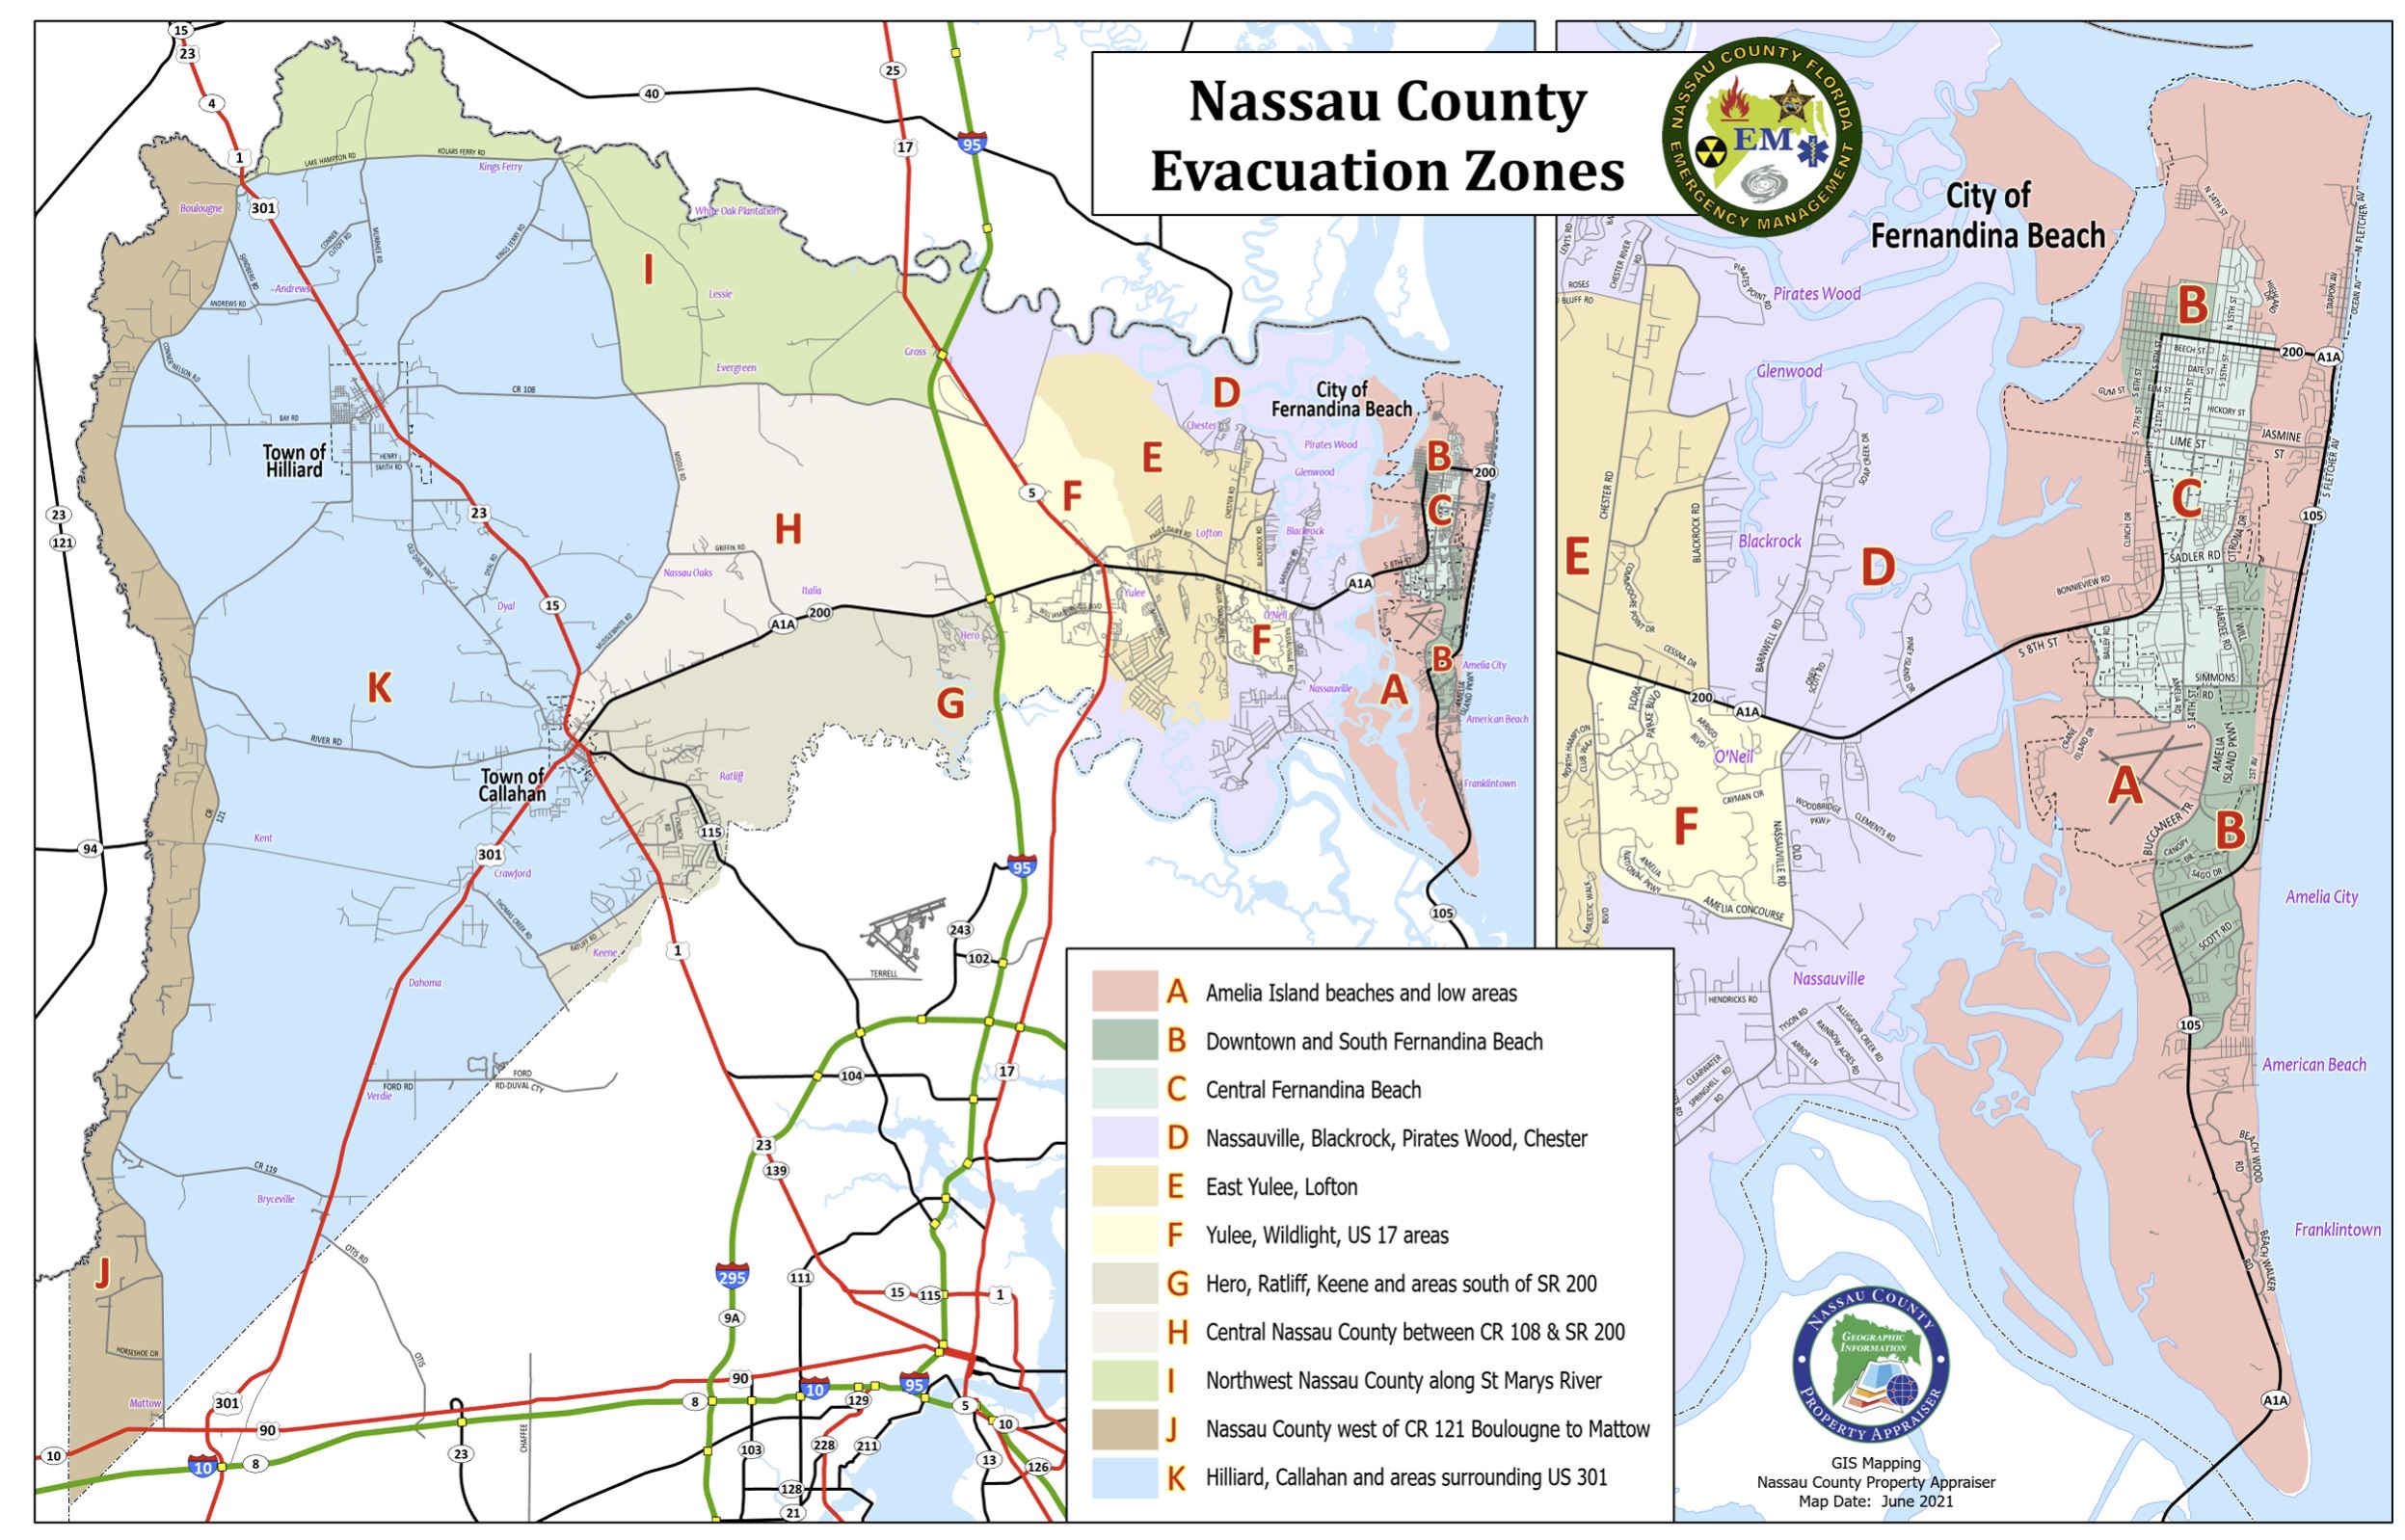 Nassau County Evacuation Zones. Source: Emergency Management.